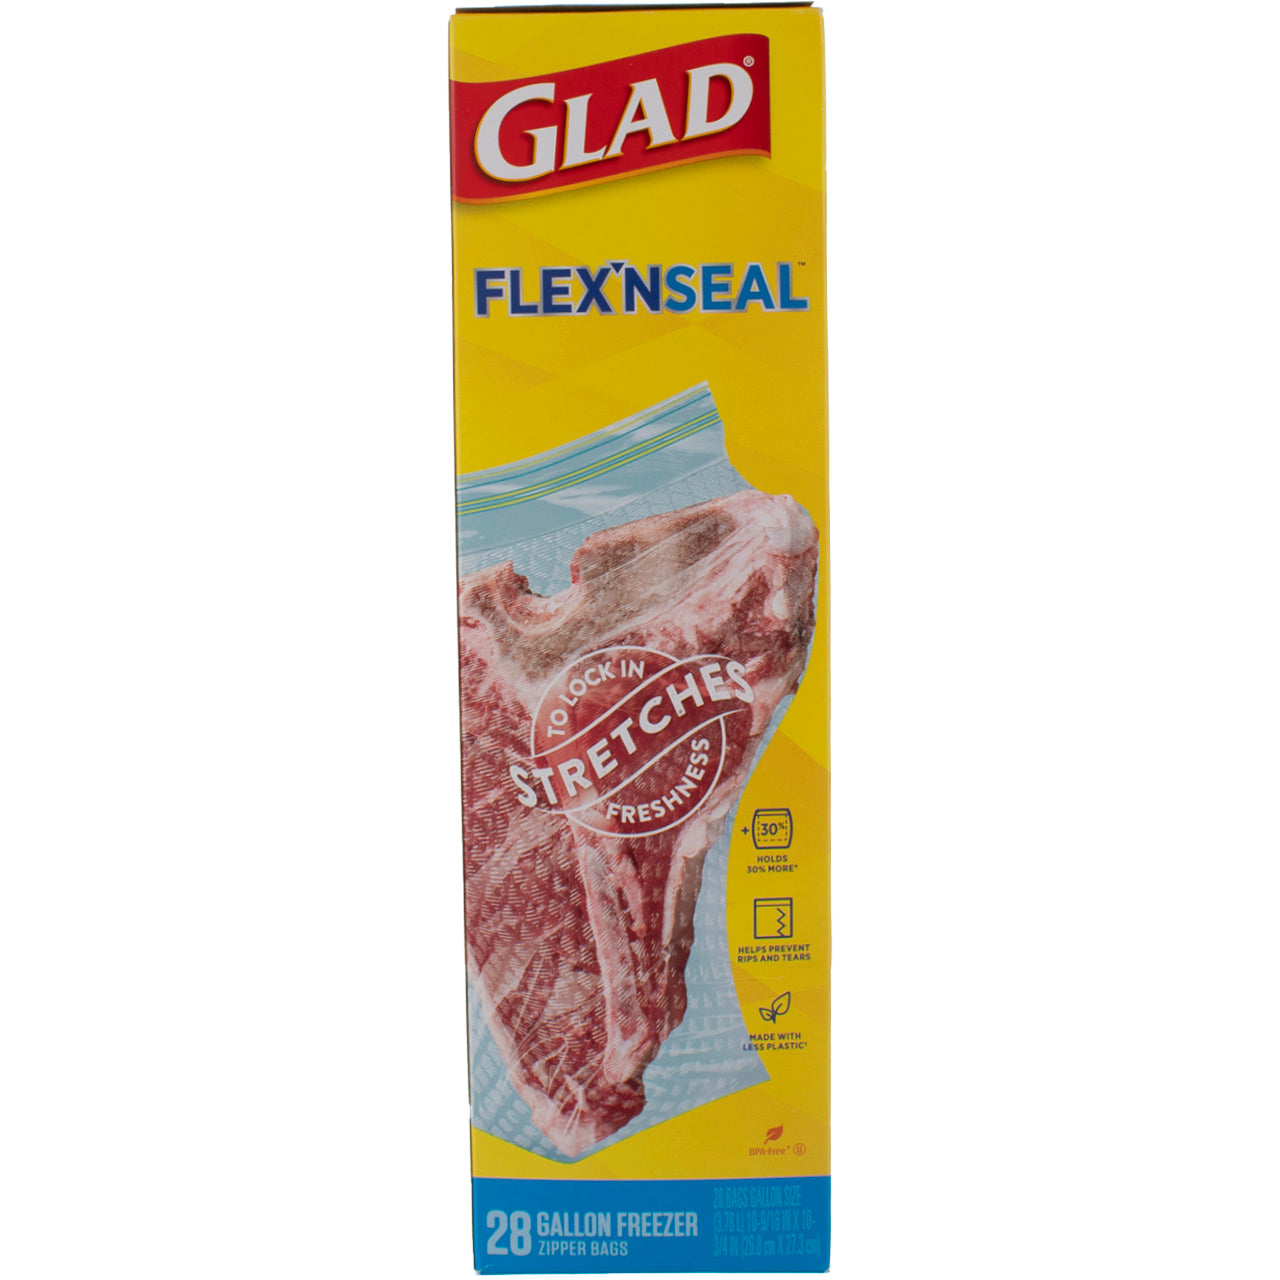 Glad FLEXN SEAL Gallon Freezer Zipper Bags, 28 Count (Pack of 4